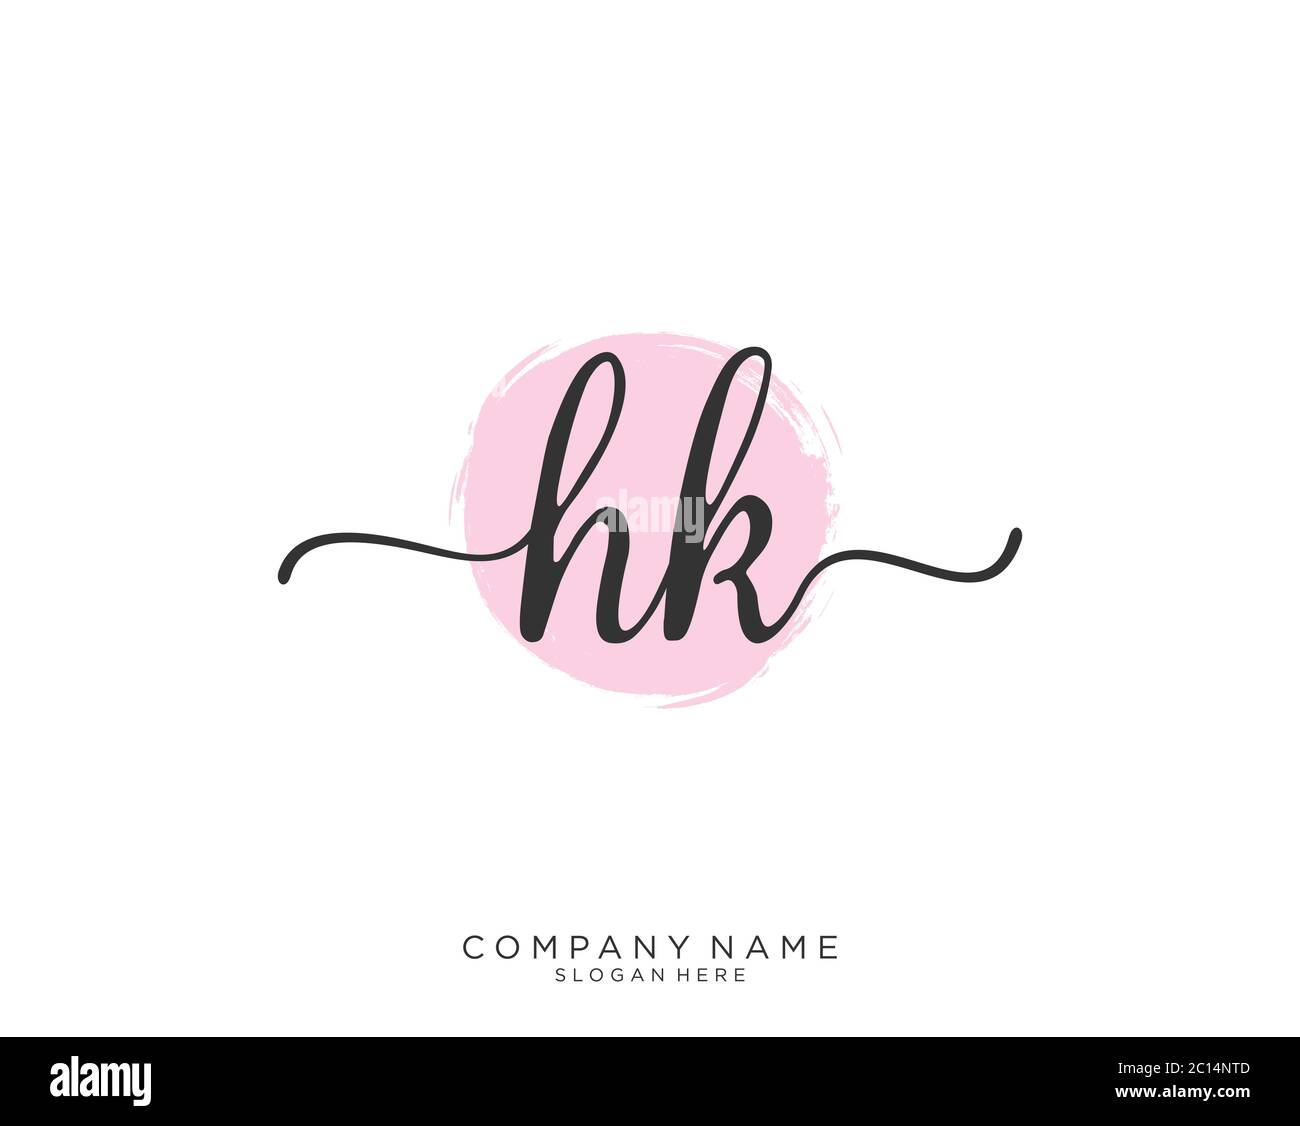 HK Initial handwriting logo vector Stock Vector